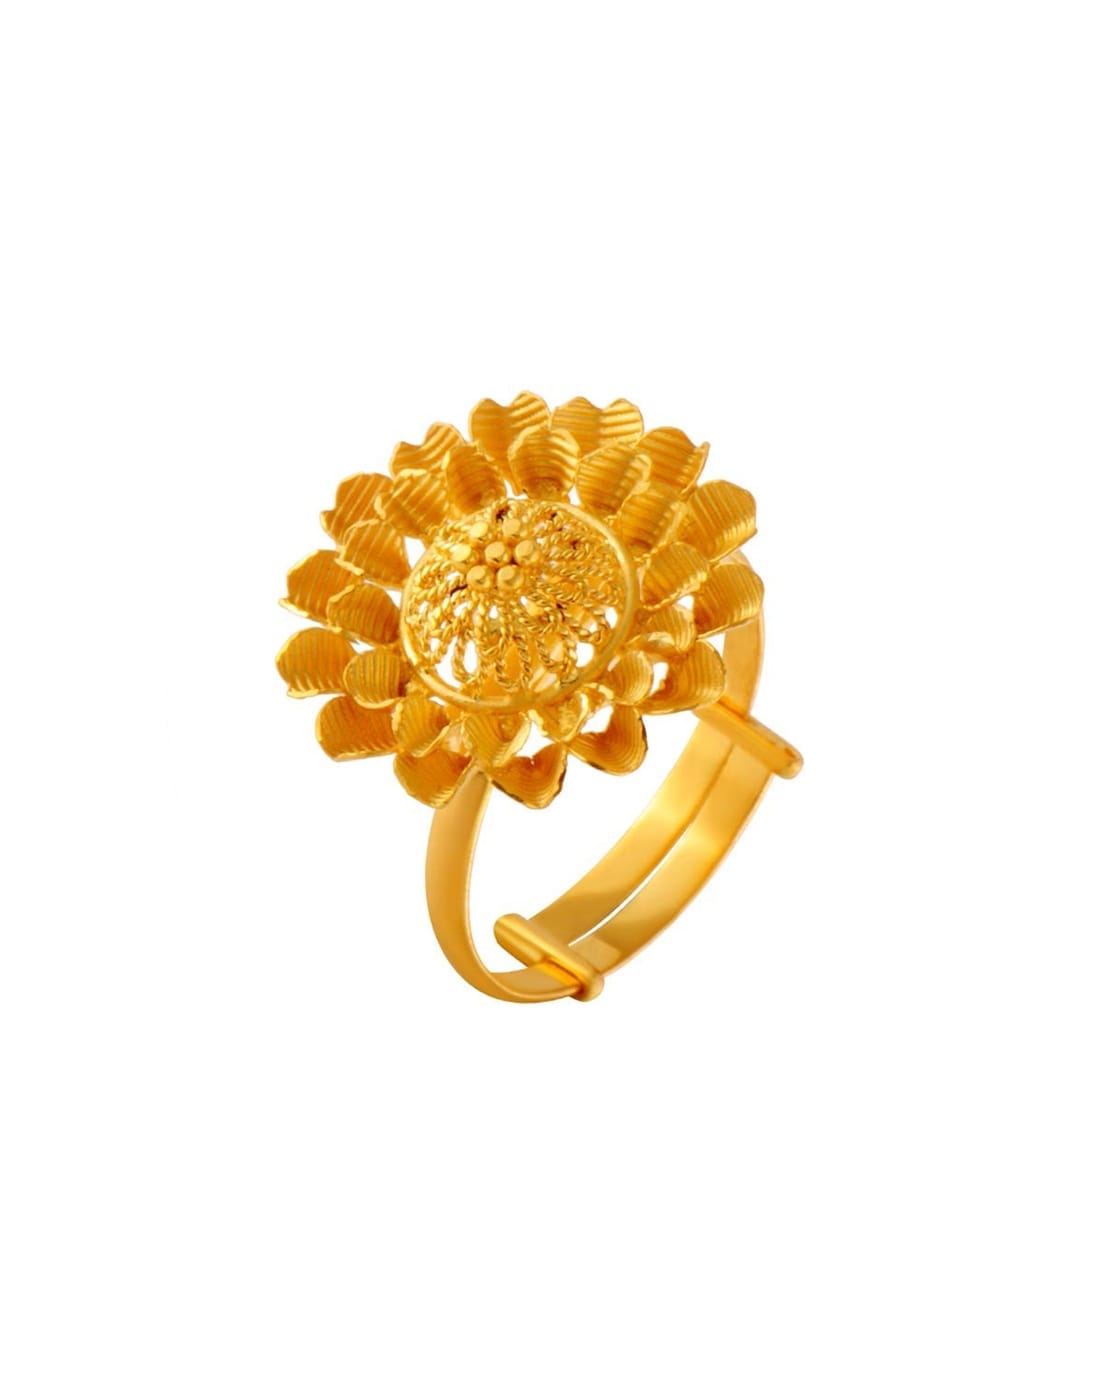 Simple & elegant Aesthetic Vintage Rings ideas | Fashion rings, Gold rings  fashion, Women rings